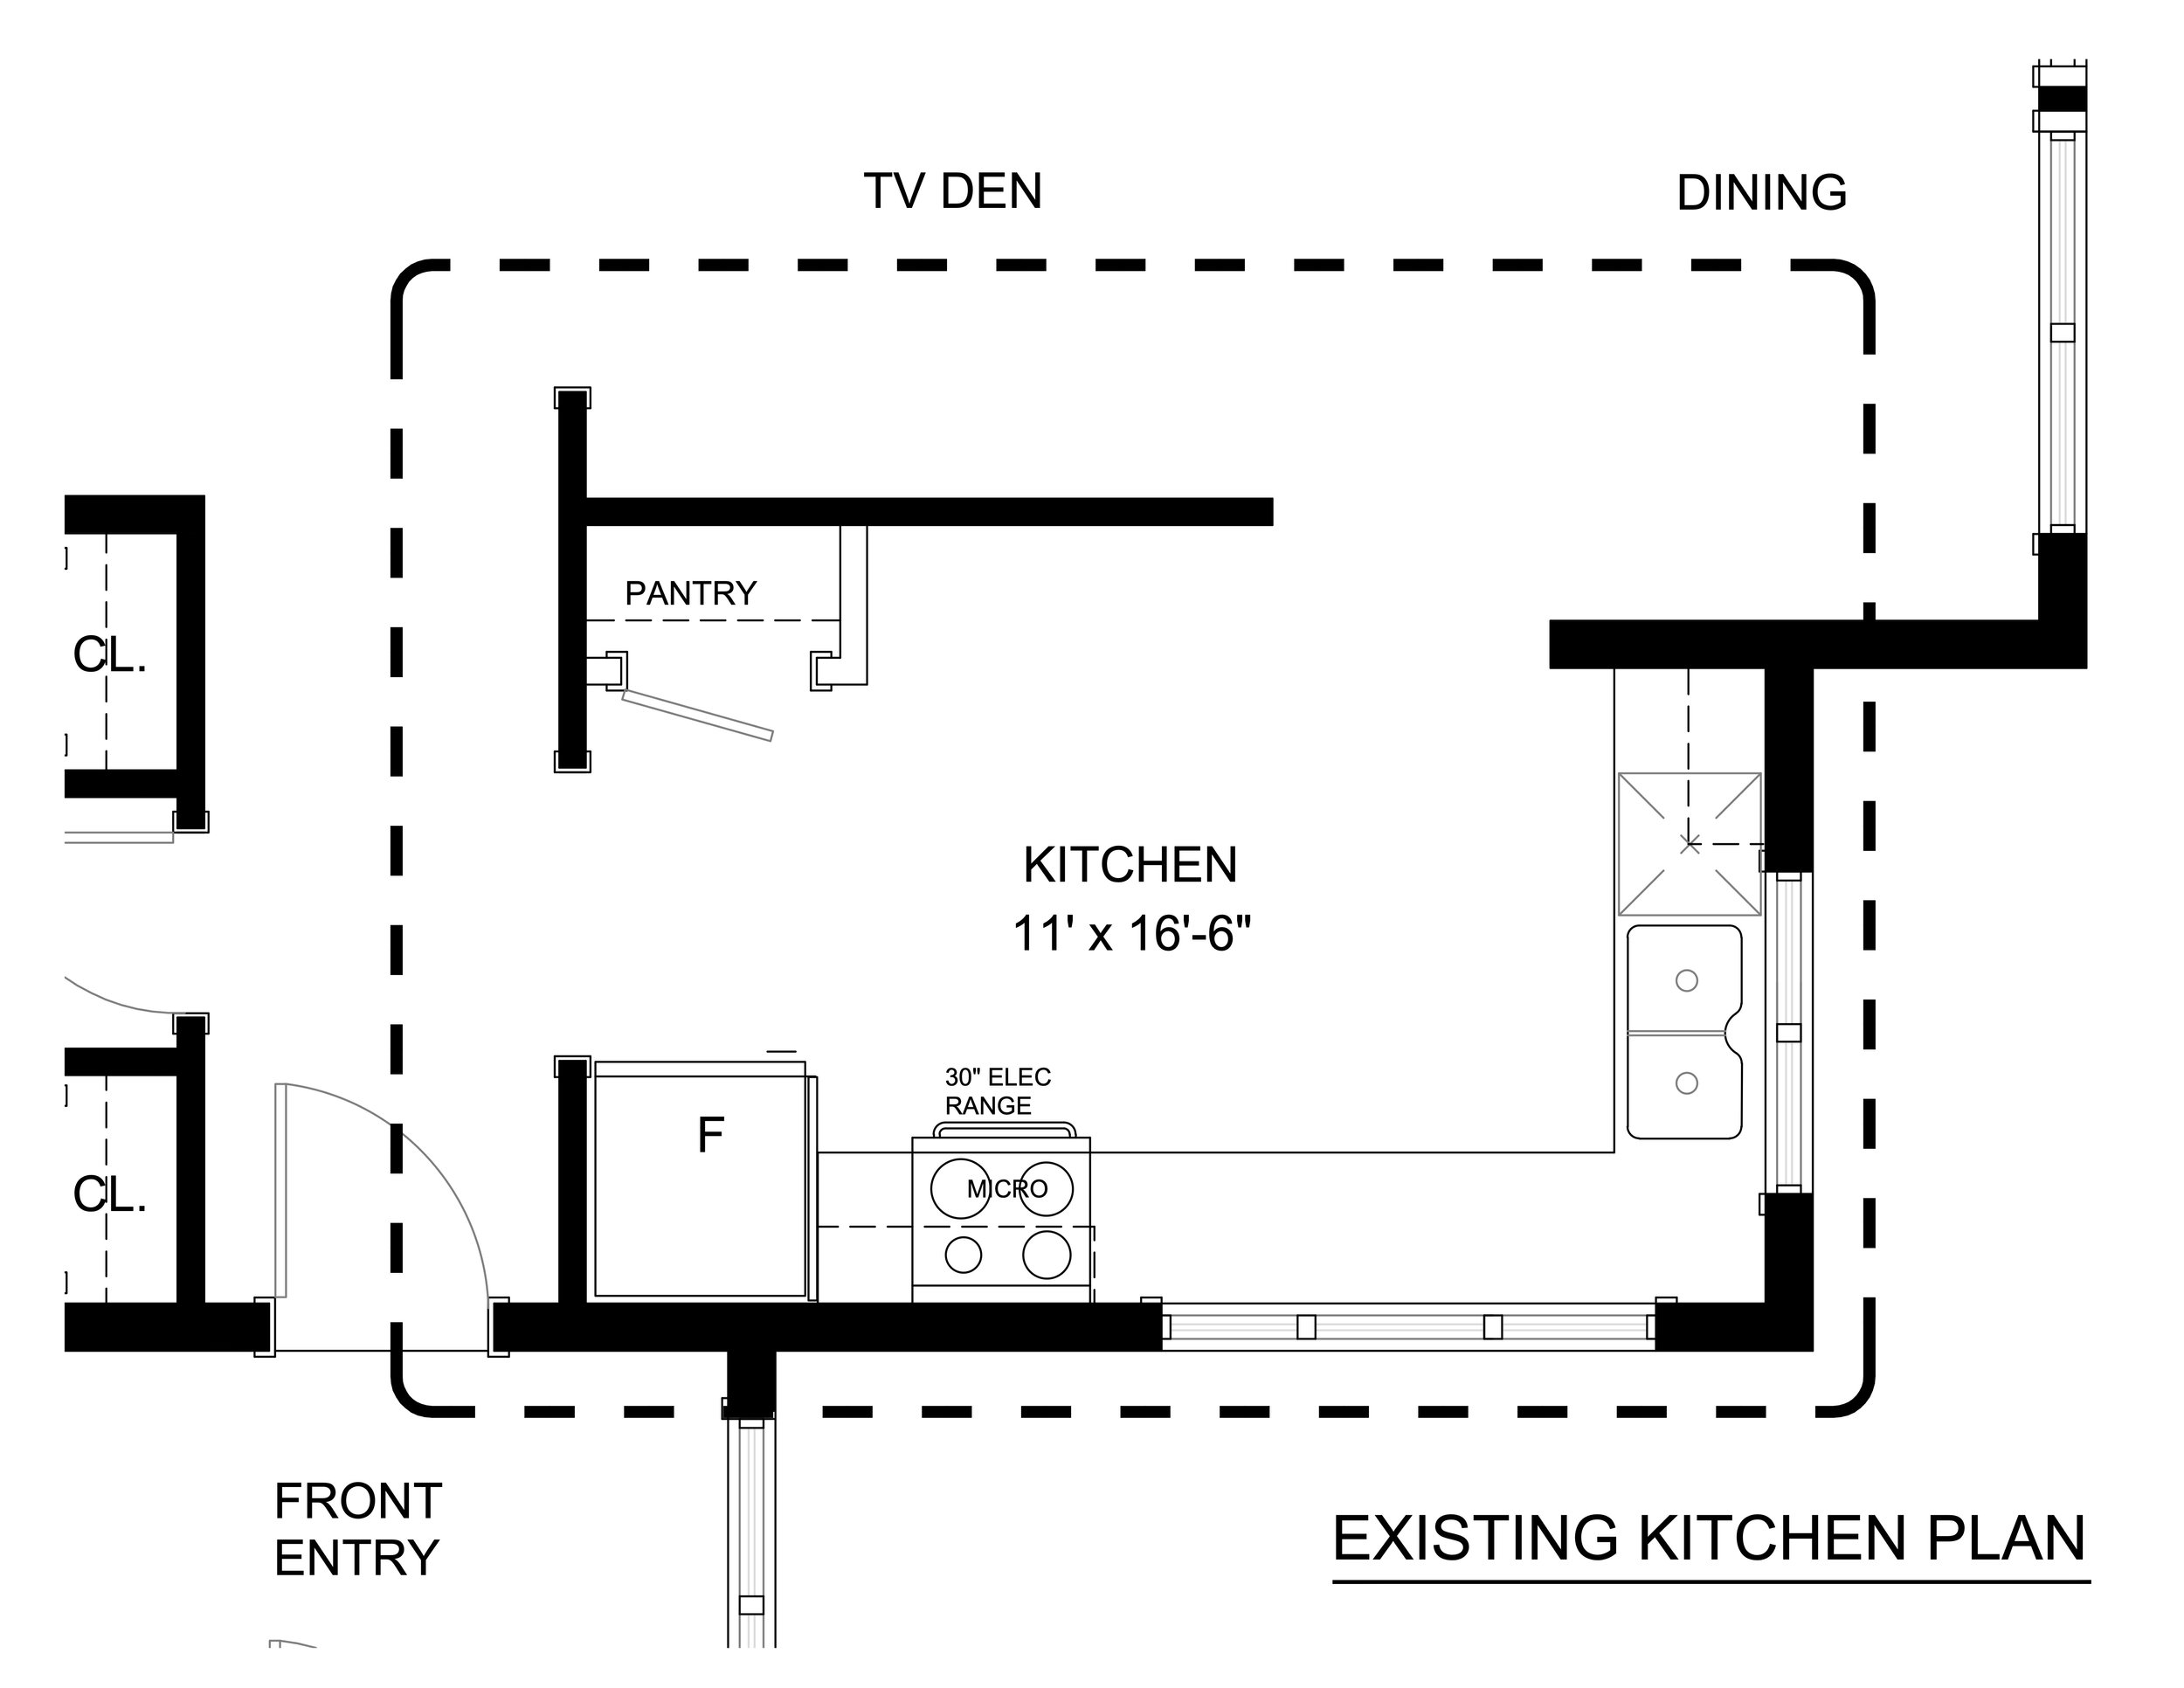 Kitchen Floor Plan - Before